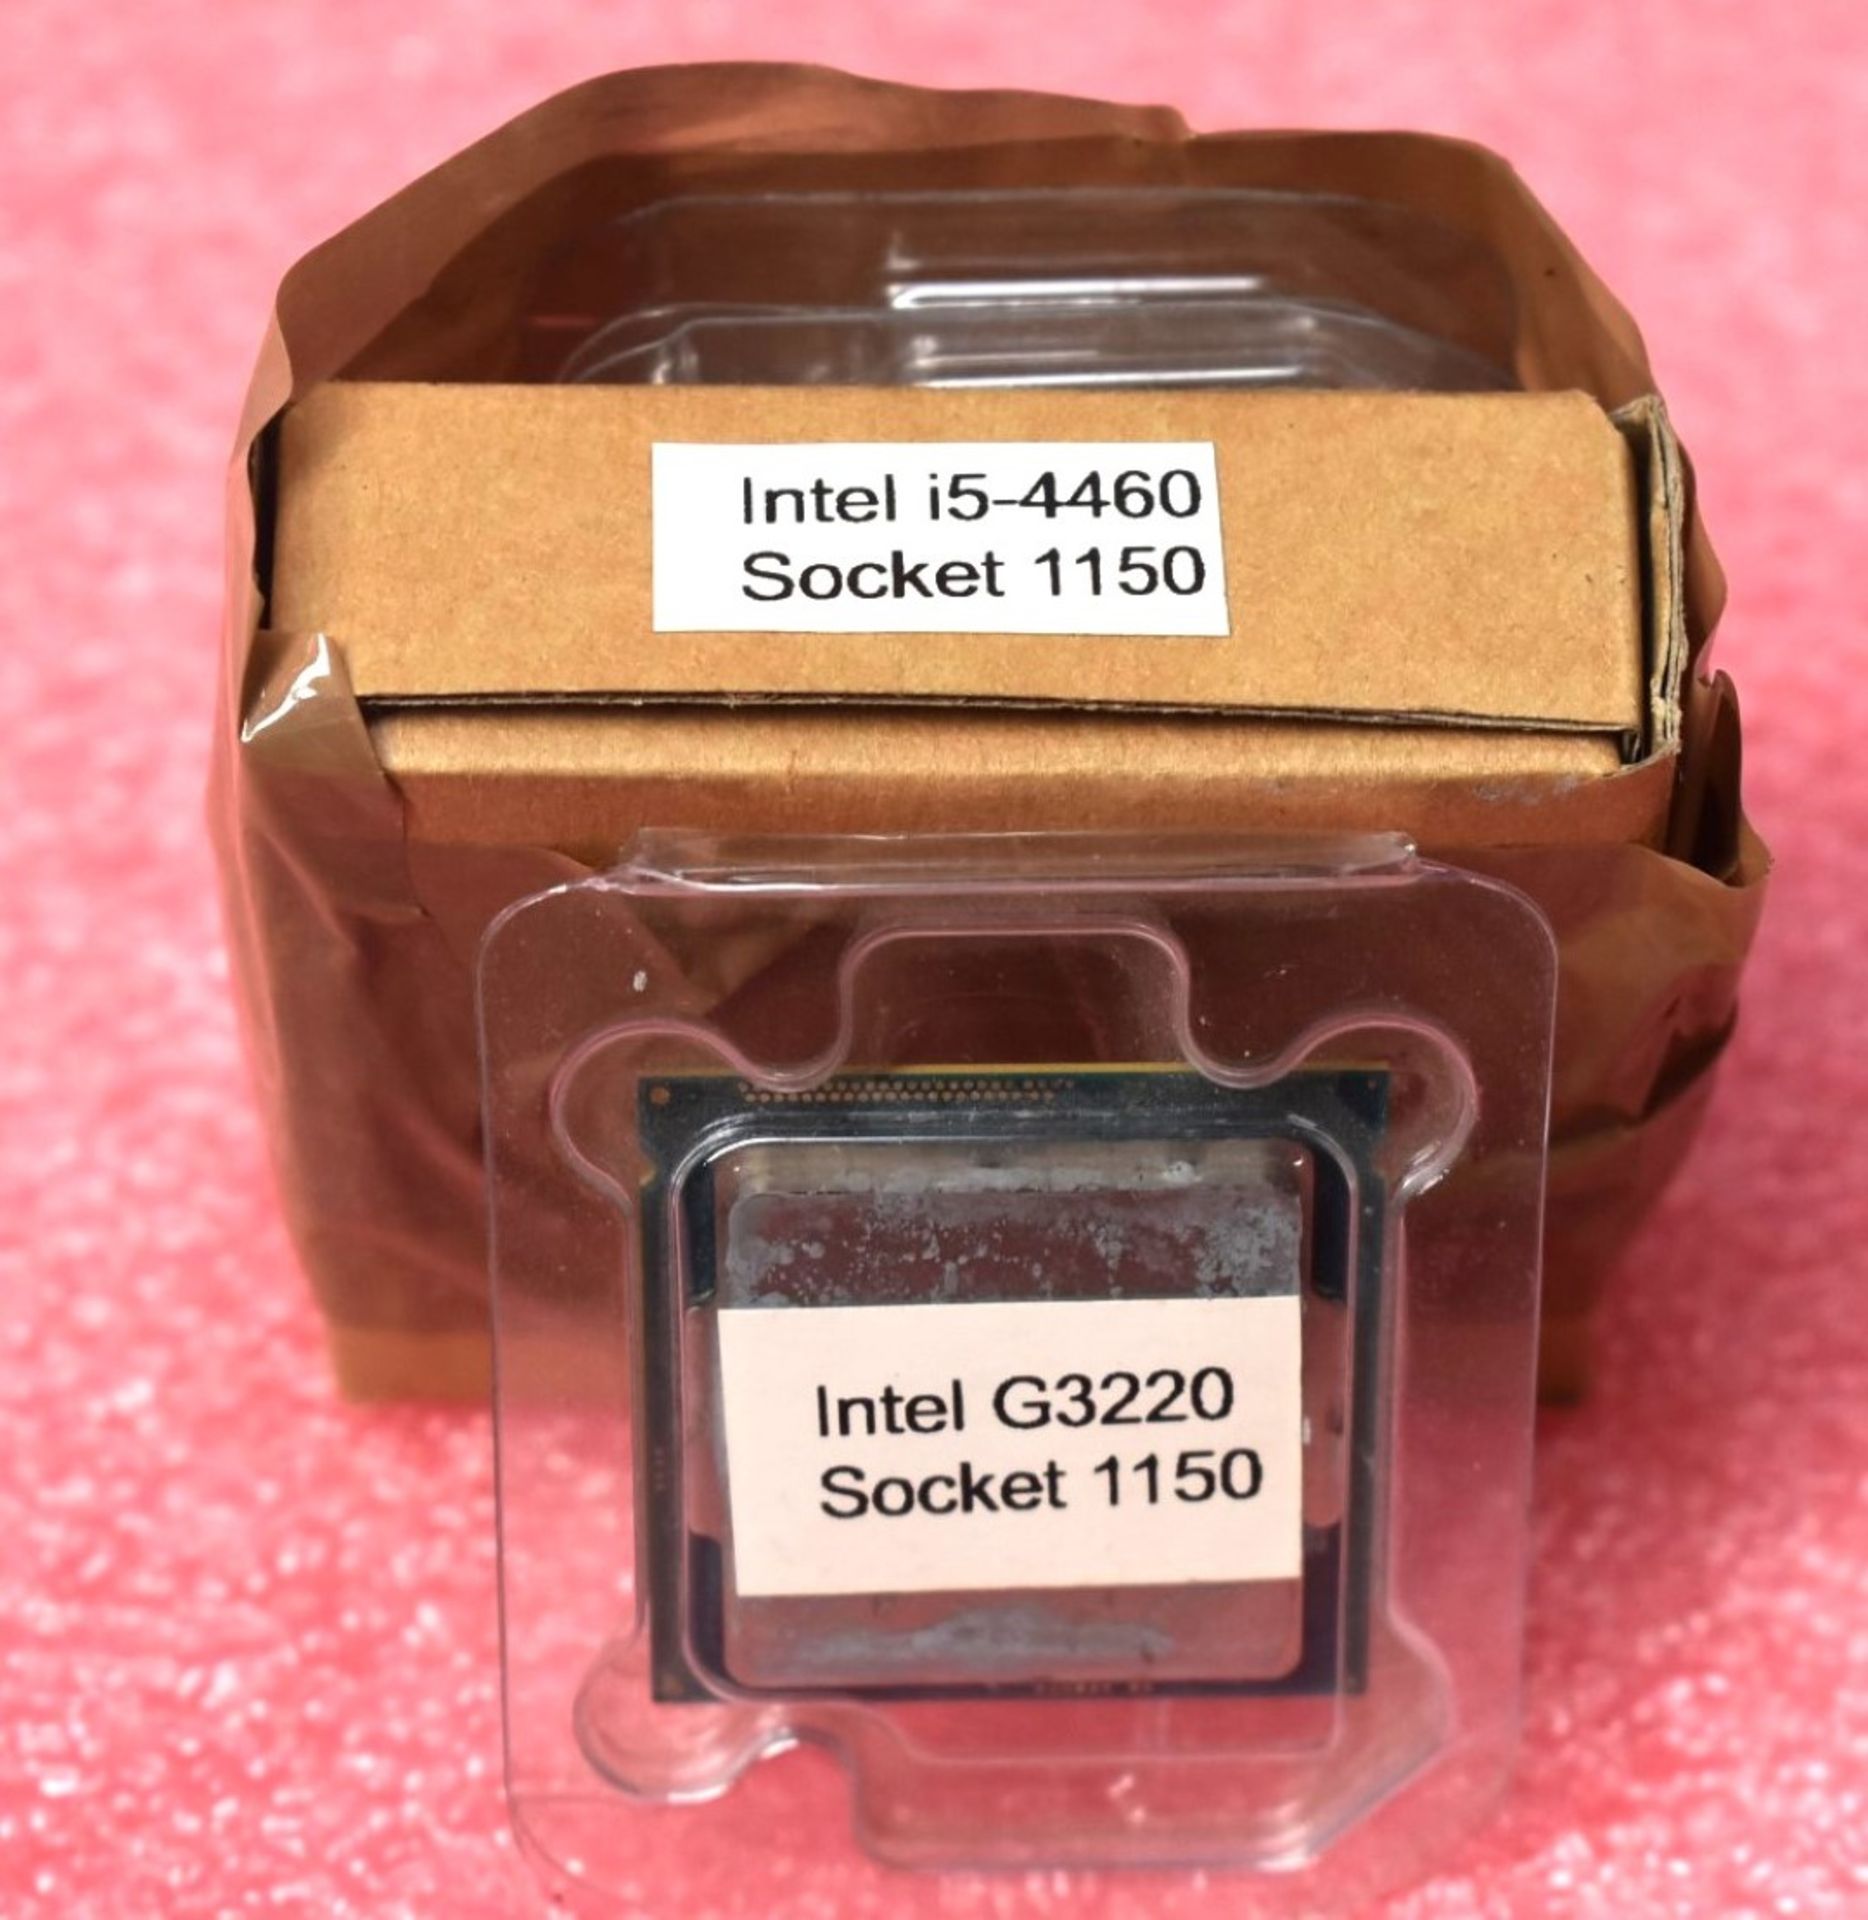 4 x Intel Socket LA1150 Desktop PC Processors - Includes 1 x I5-4460, 2 x G3220 and 1 x I5-4460 - Image 3 of 3